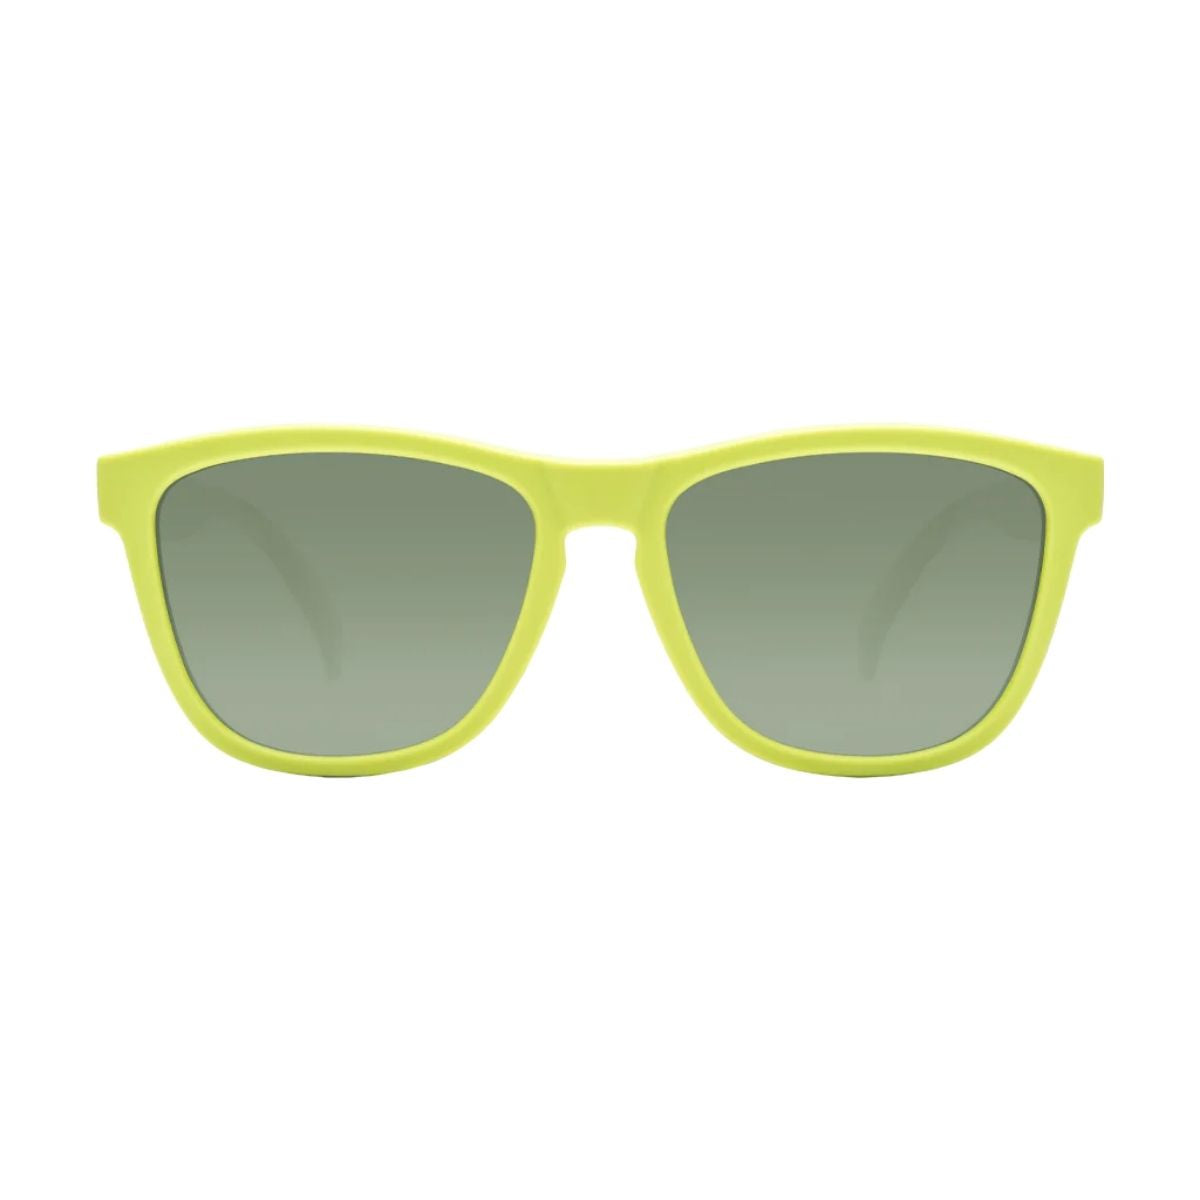 Ripe and Ready - Avocado Print Sunglasses